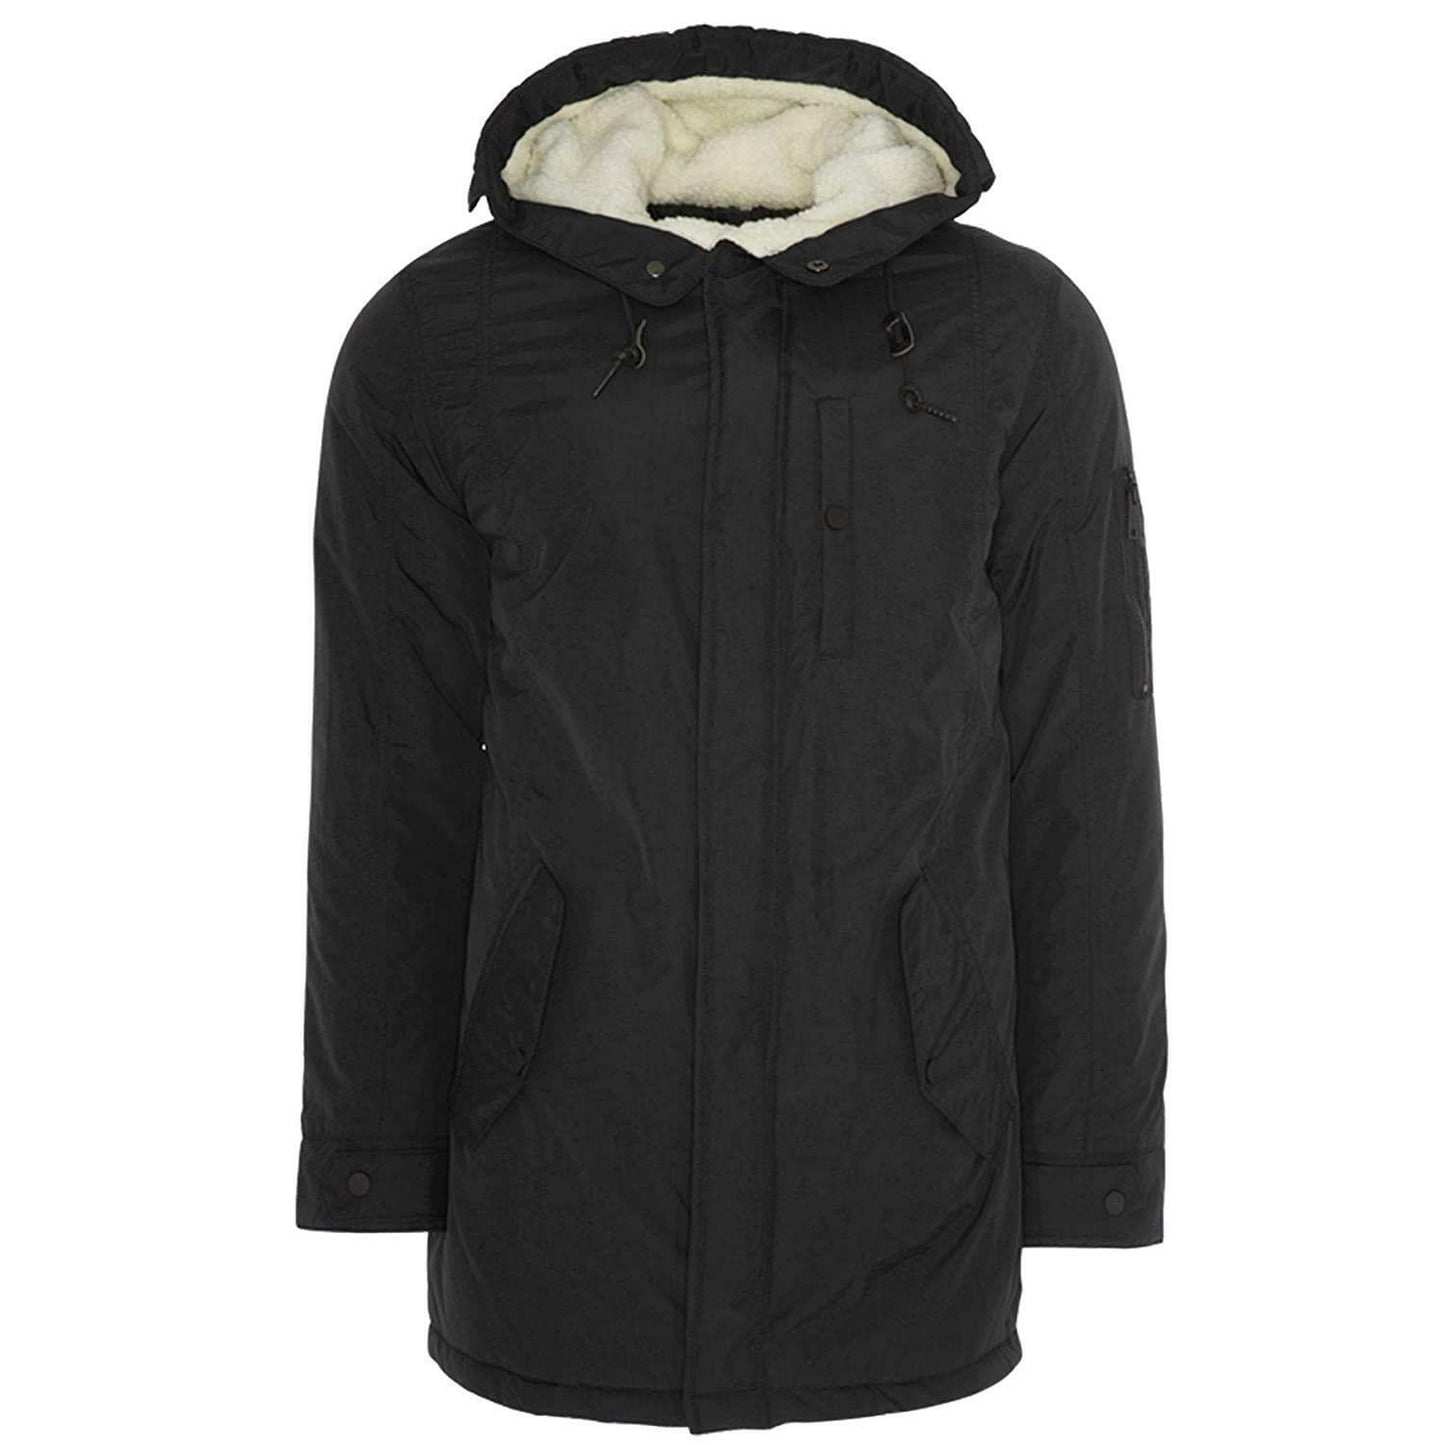 Mens Long Jacket Brave Soul Coat Hooded Parka Lightweight Warm Windproof Outdoor